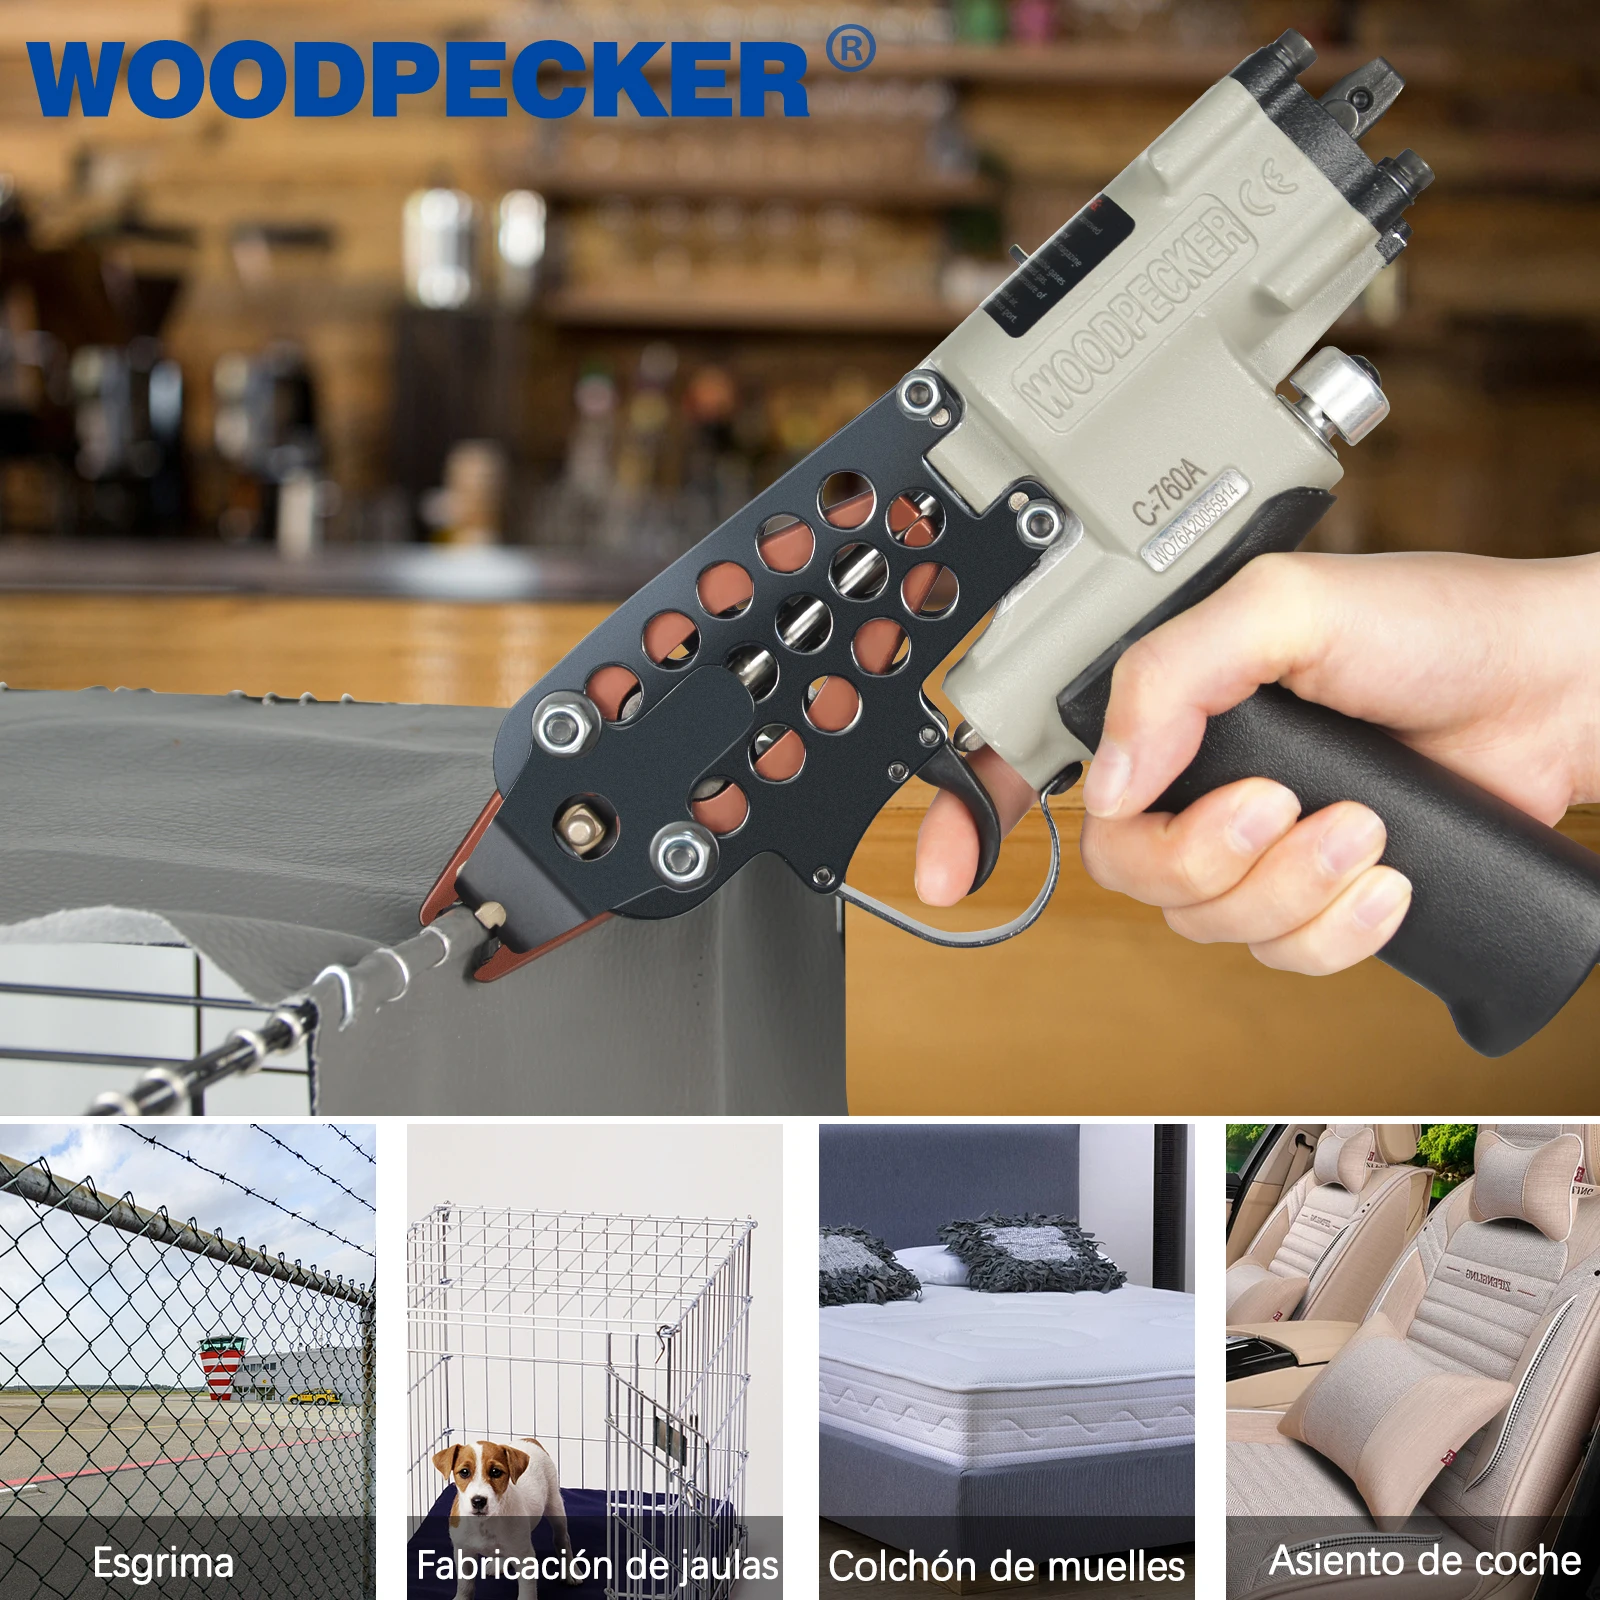 Woodpecker C130L - Grapadora neumática de anillo de cerdo calibre 11,  diámetro de cierre de 0.51 a 0.55 pulgadas, corona de 1-1/2 pulgadas,  potente